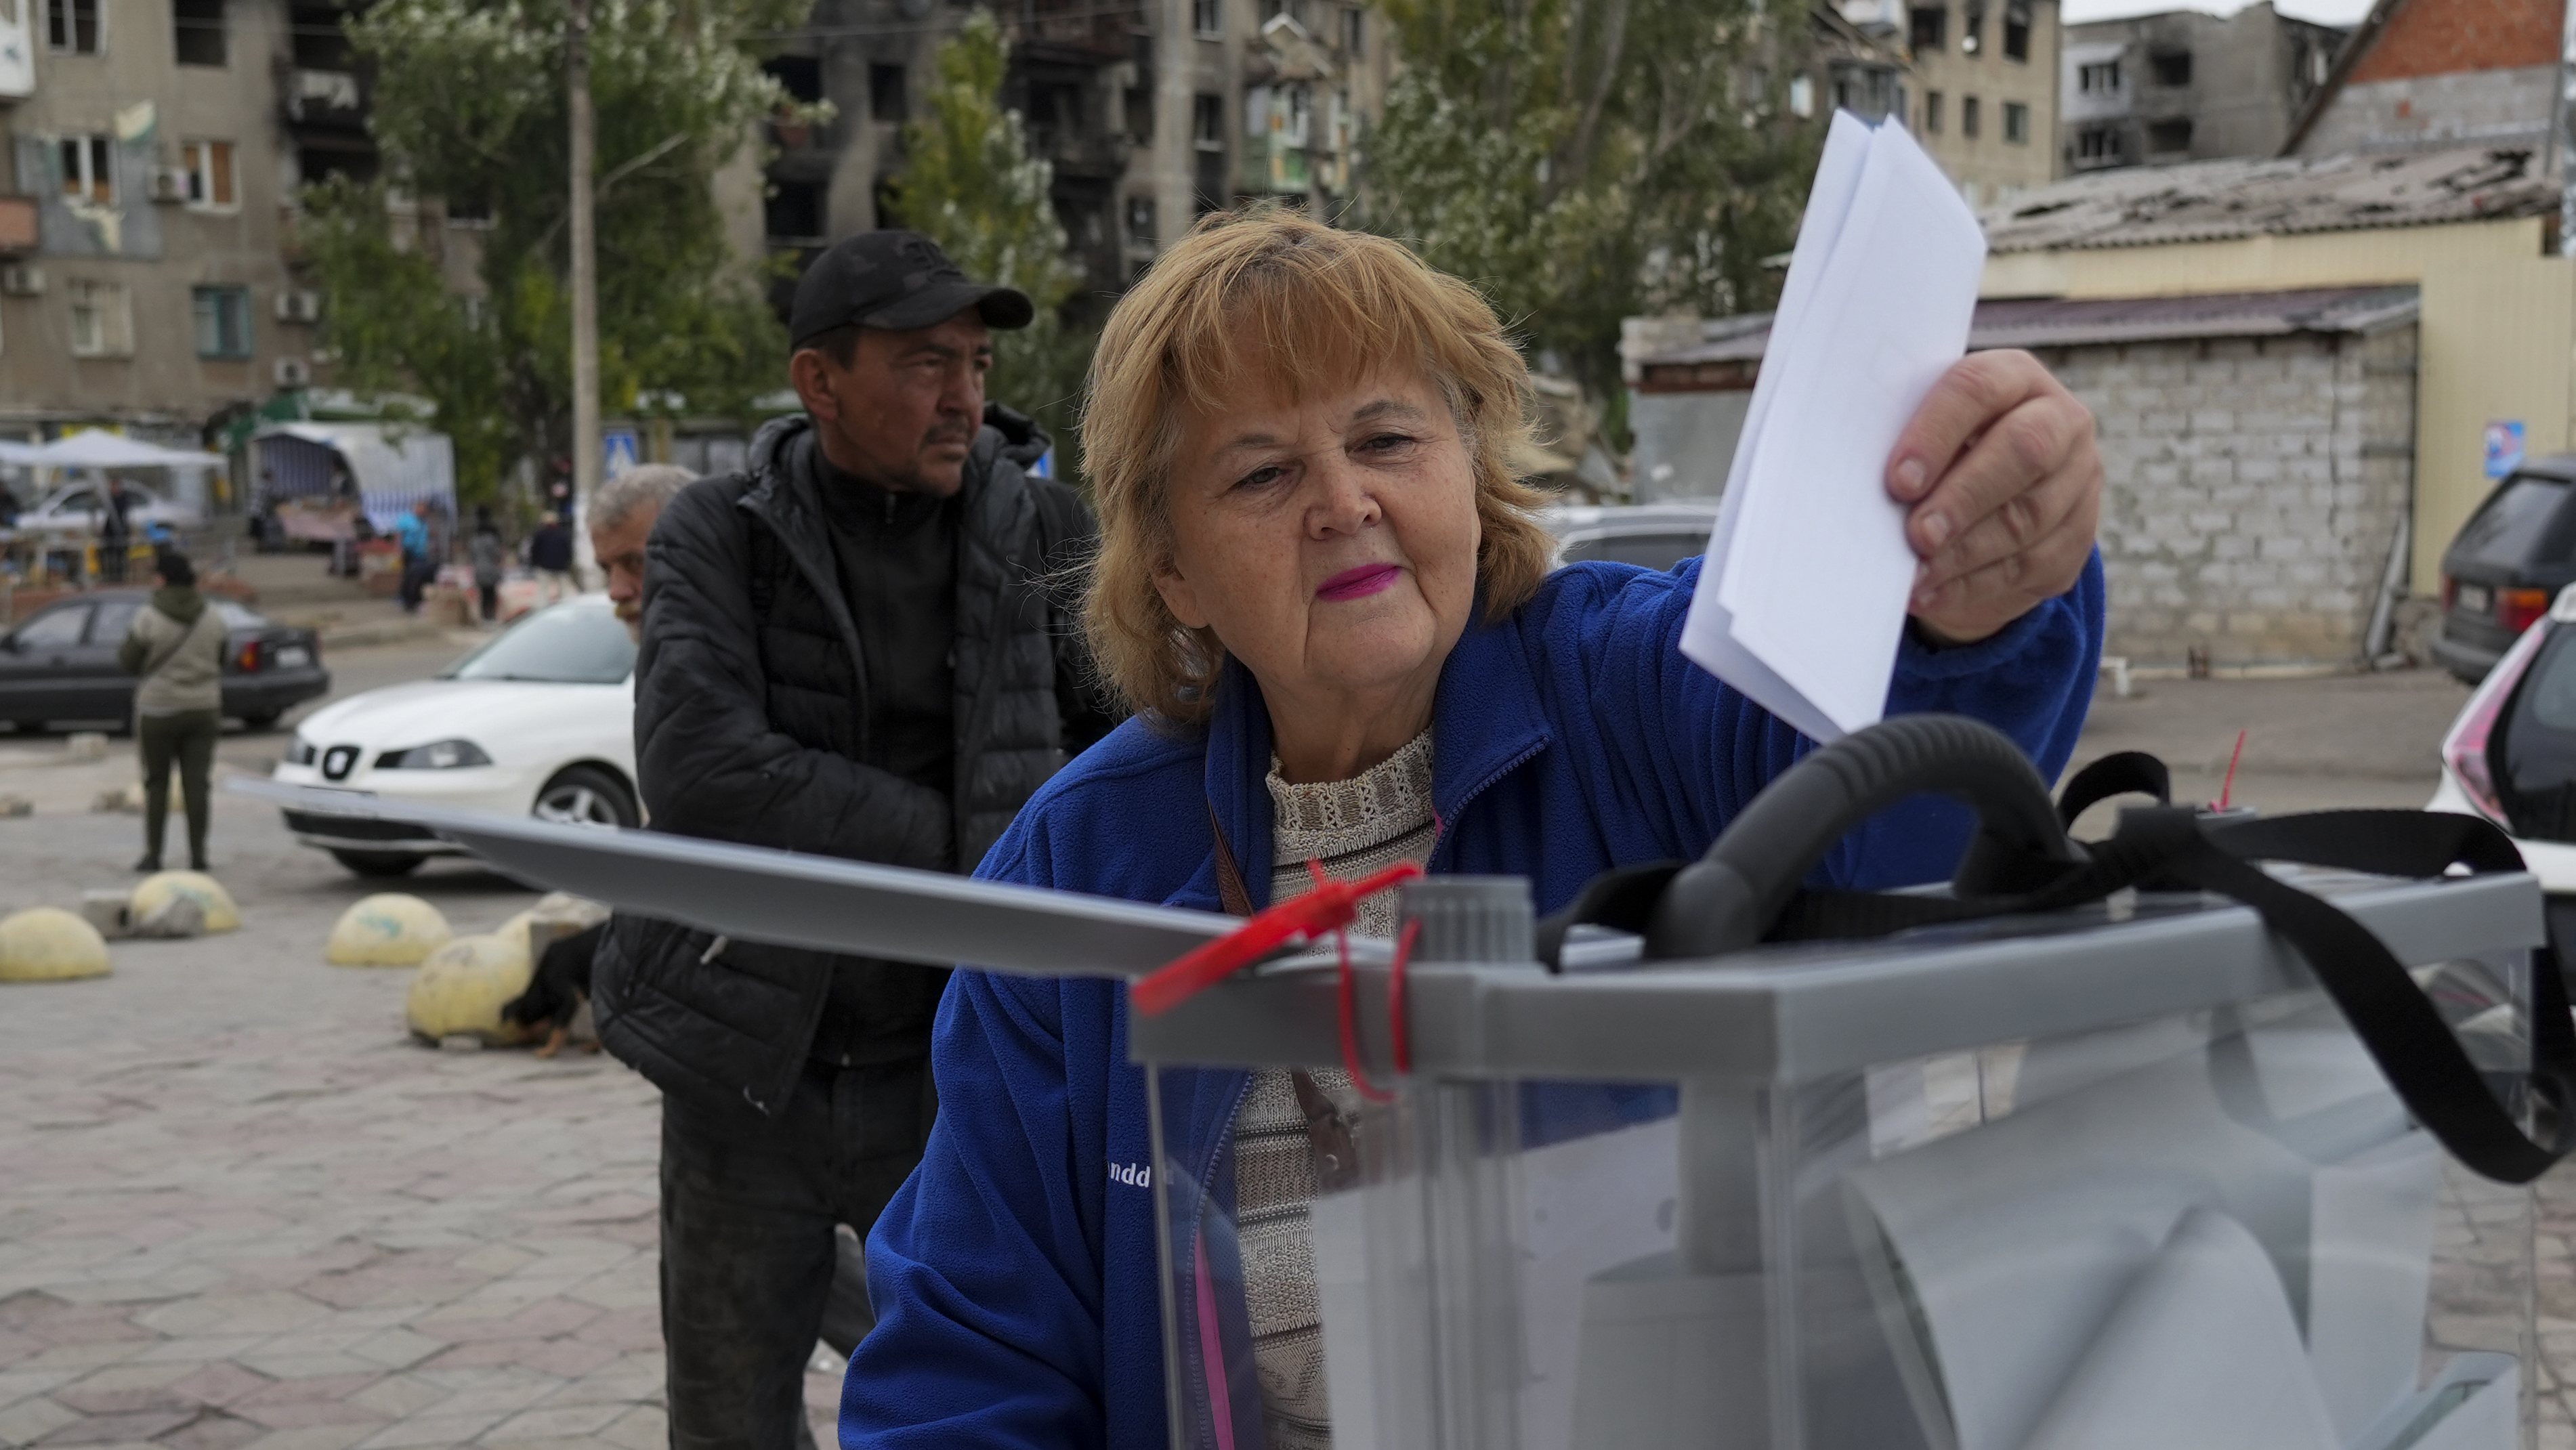 Voting in controversial Ukraine referendums